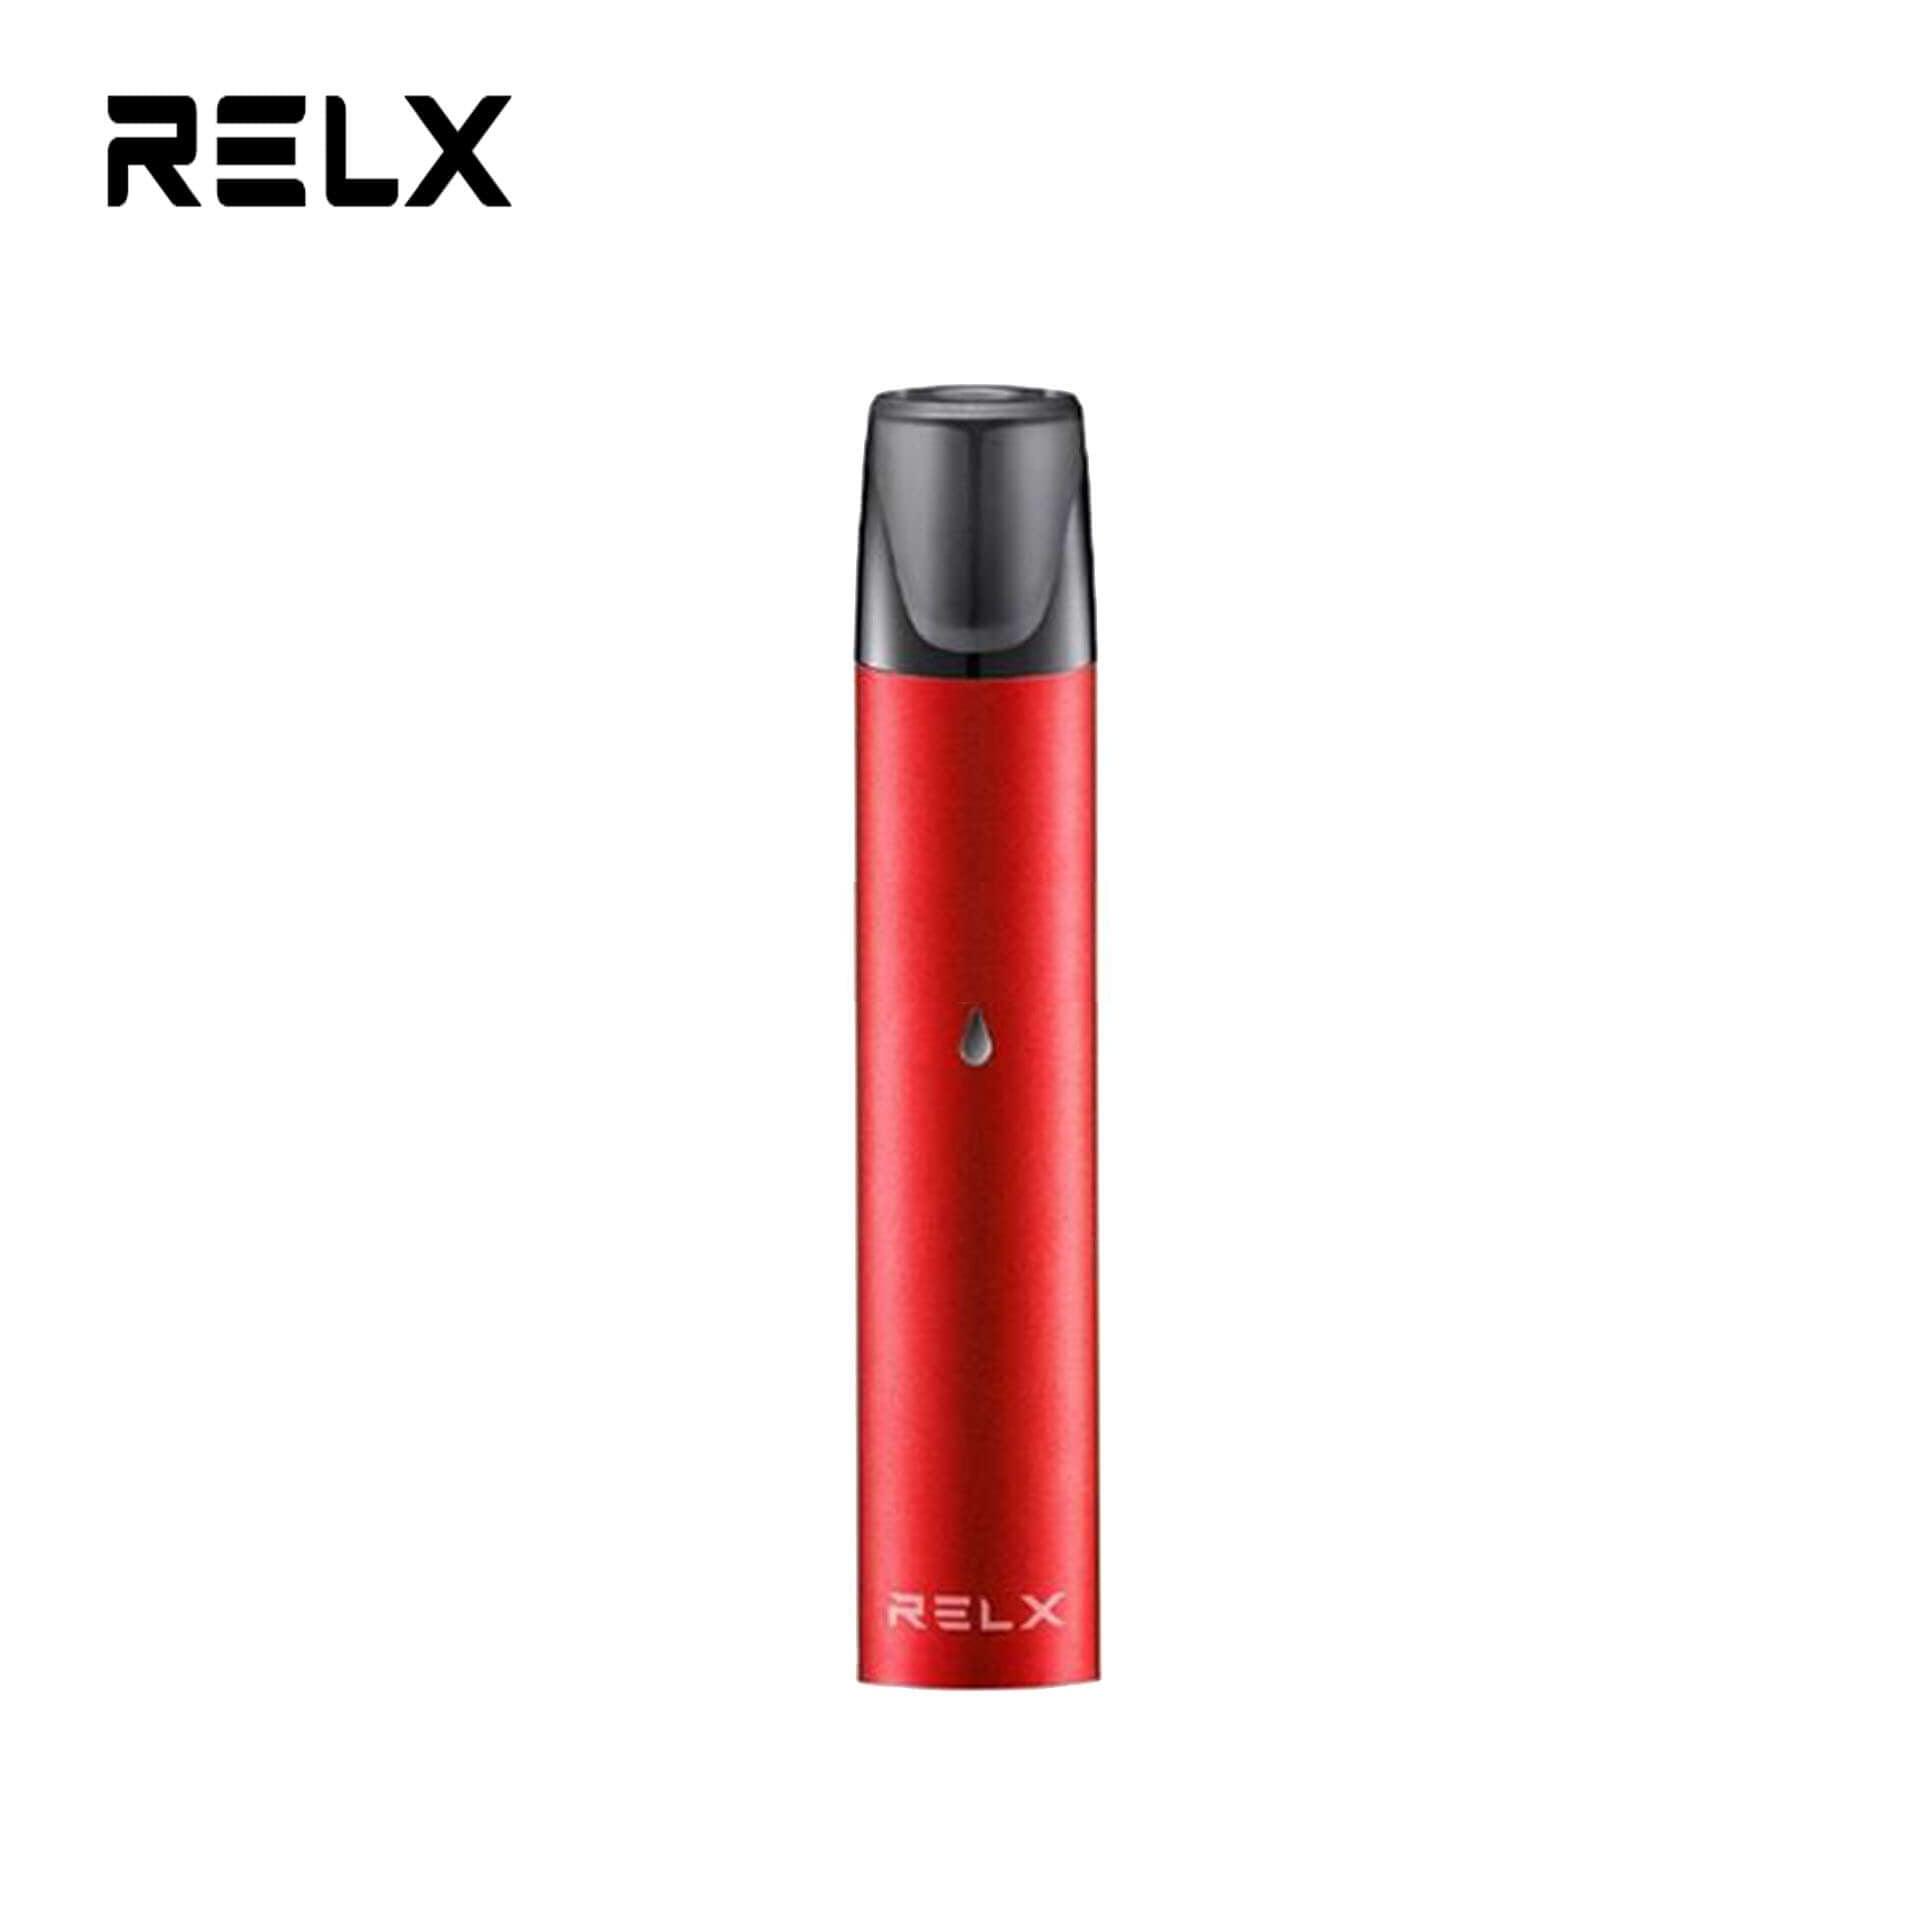 Relx Classic Device (Merlion Vape SG) -  Red - Merlion Vape SG